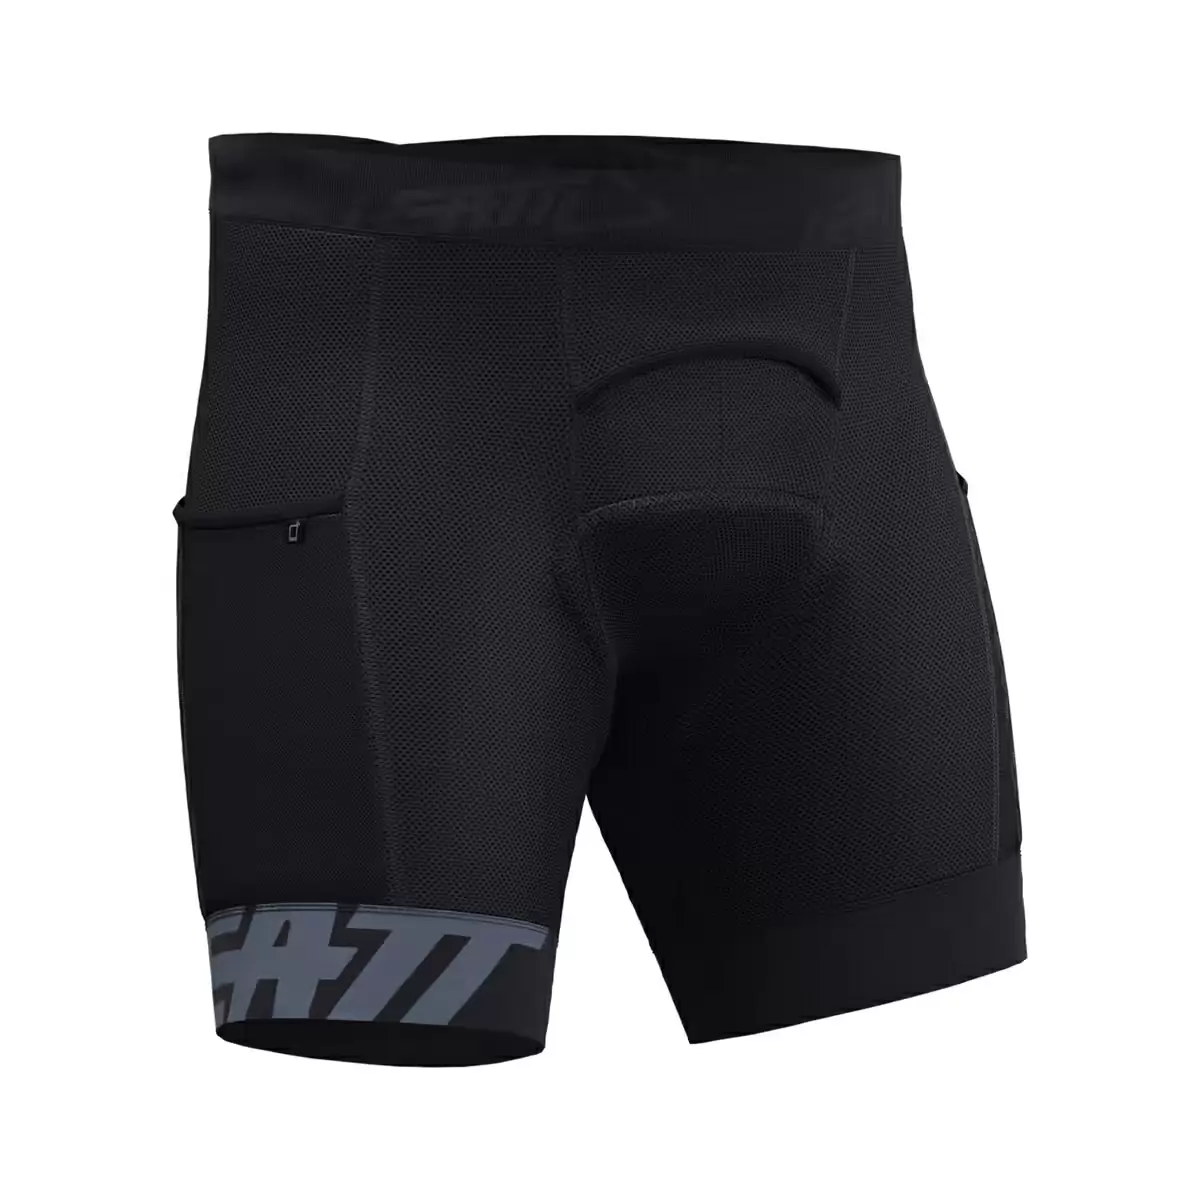 Liner MTB 3.0 protective underwear shorts black size XS (46) - image